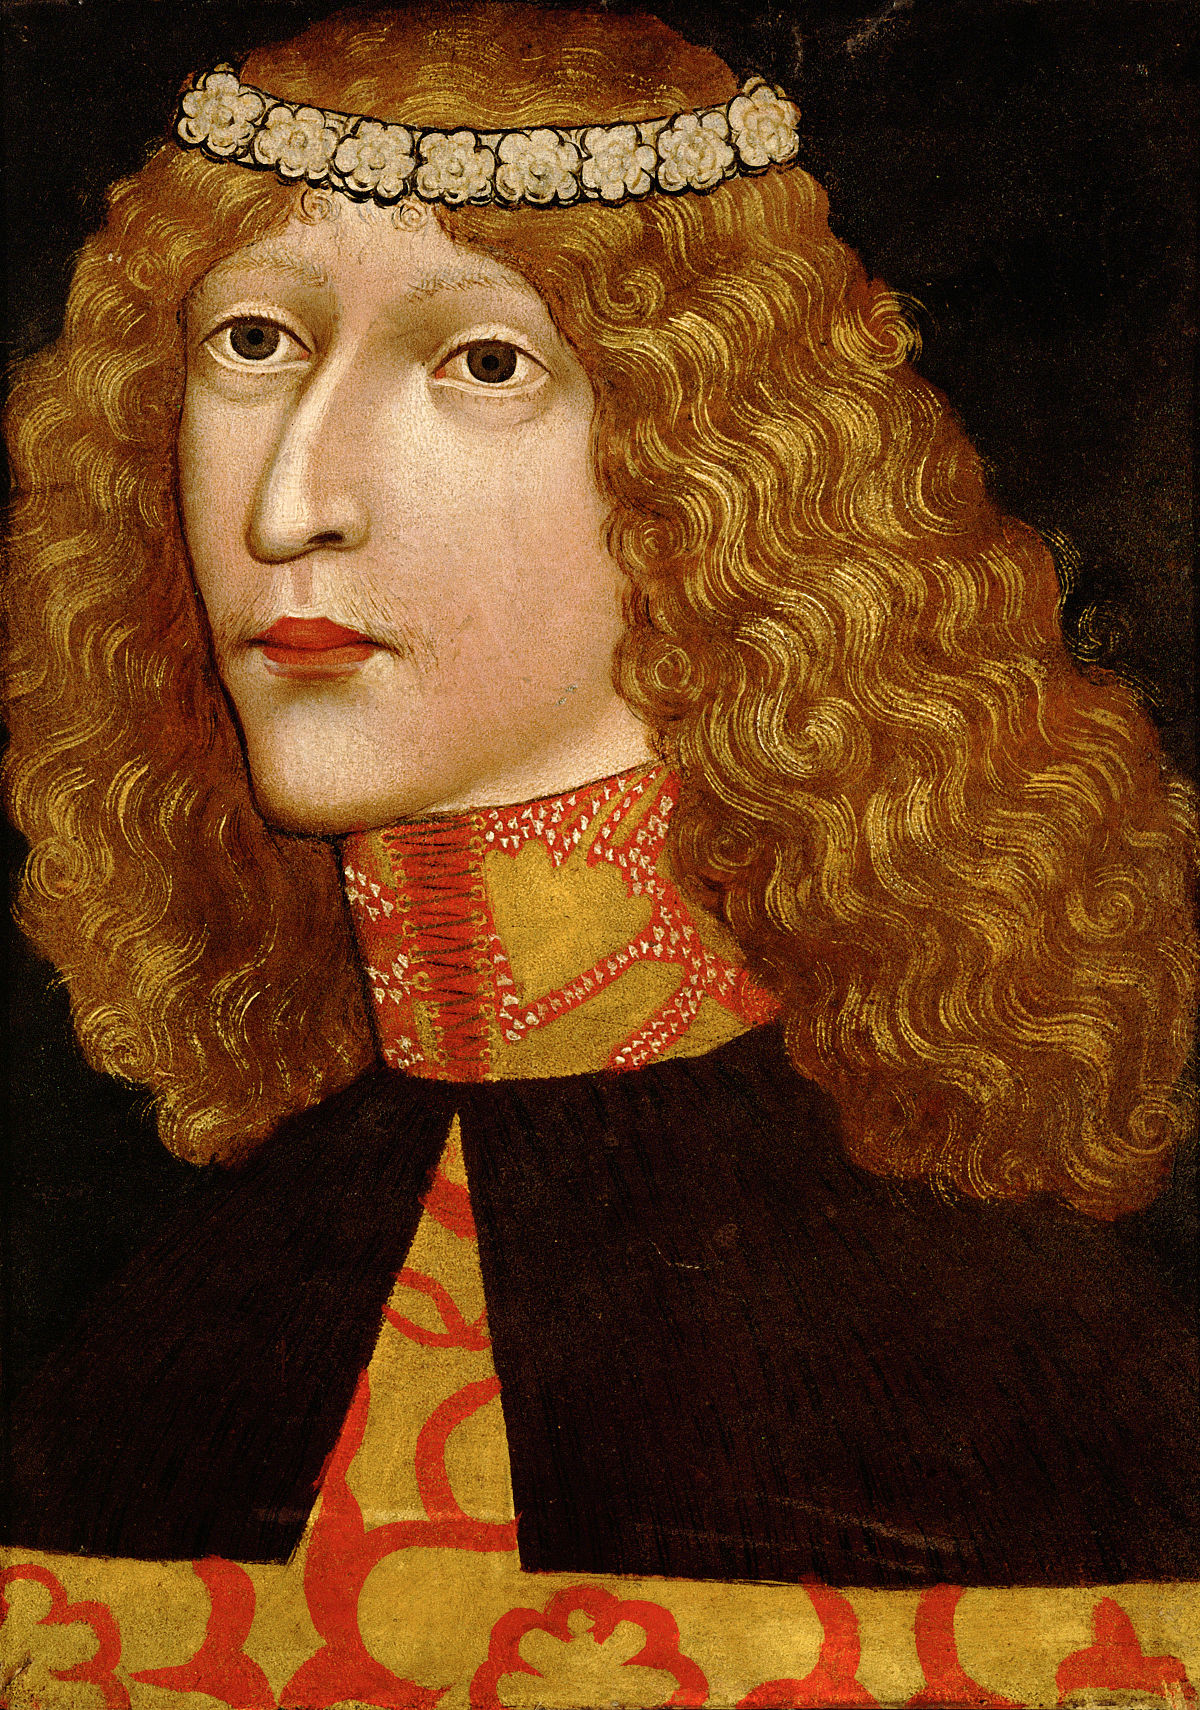 Ladislaus V, rightful monarch